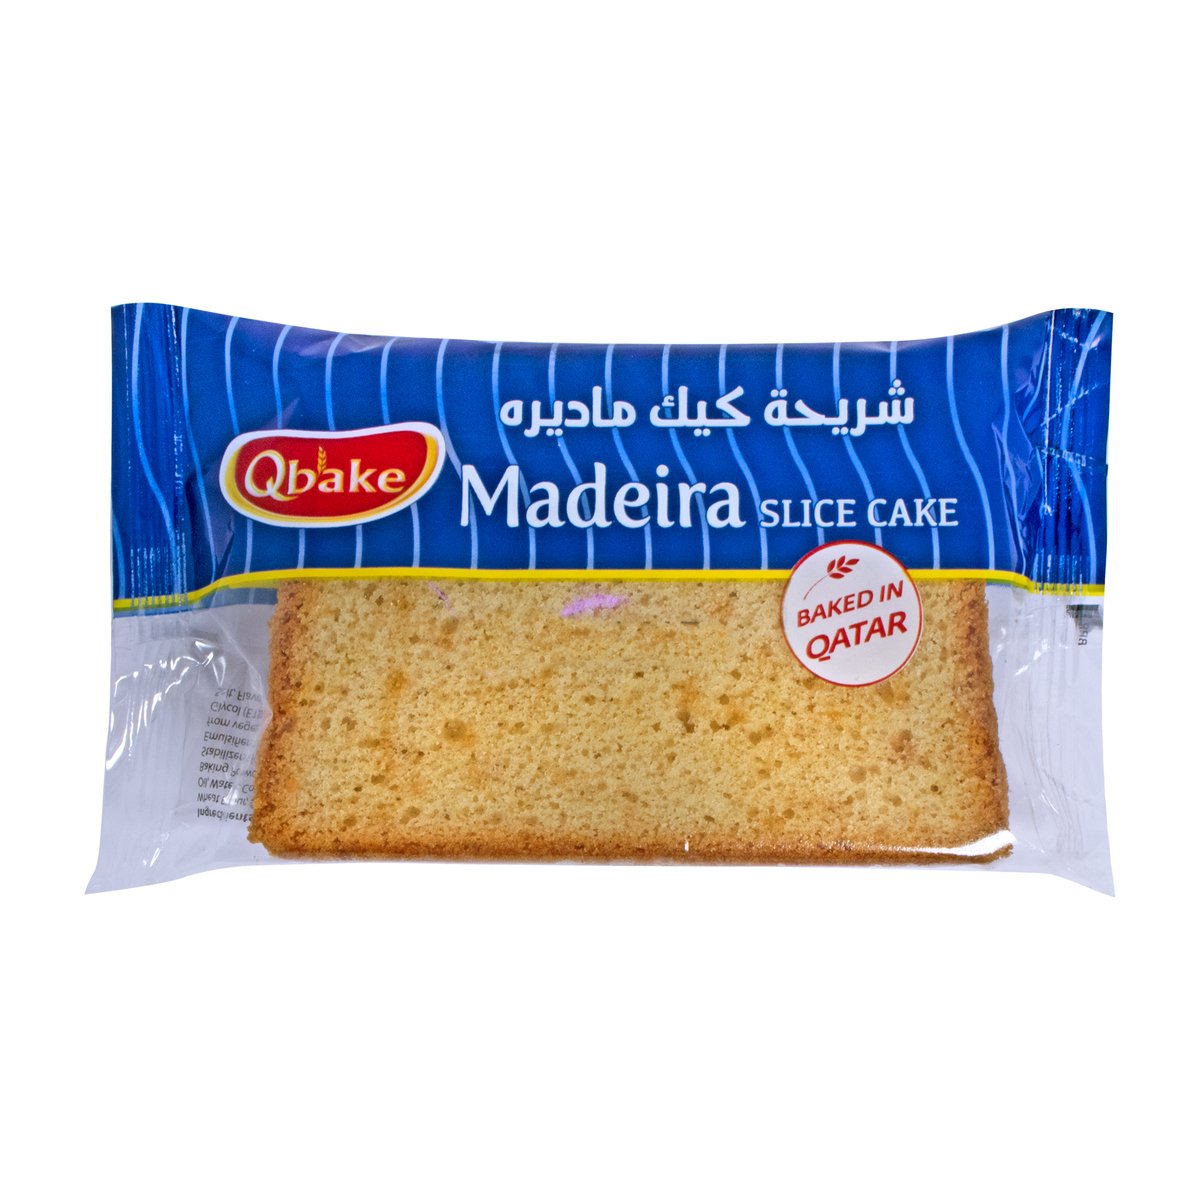 Qbake Madeira Slice Cake 1Pc